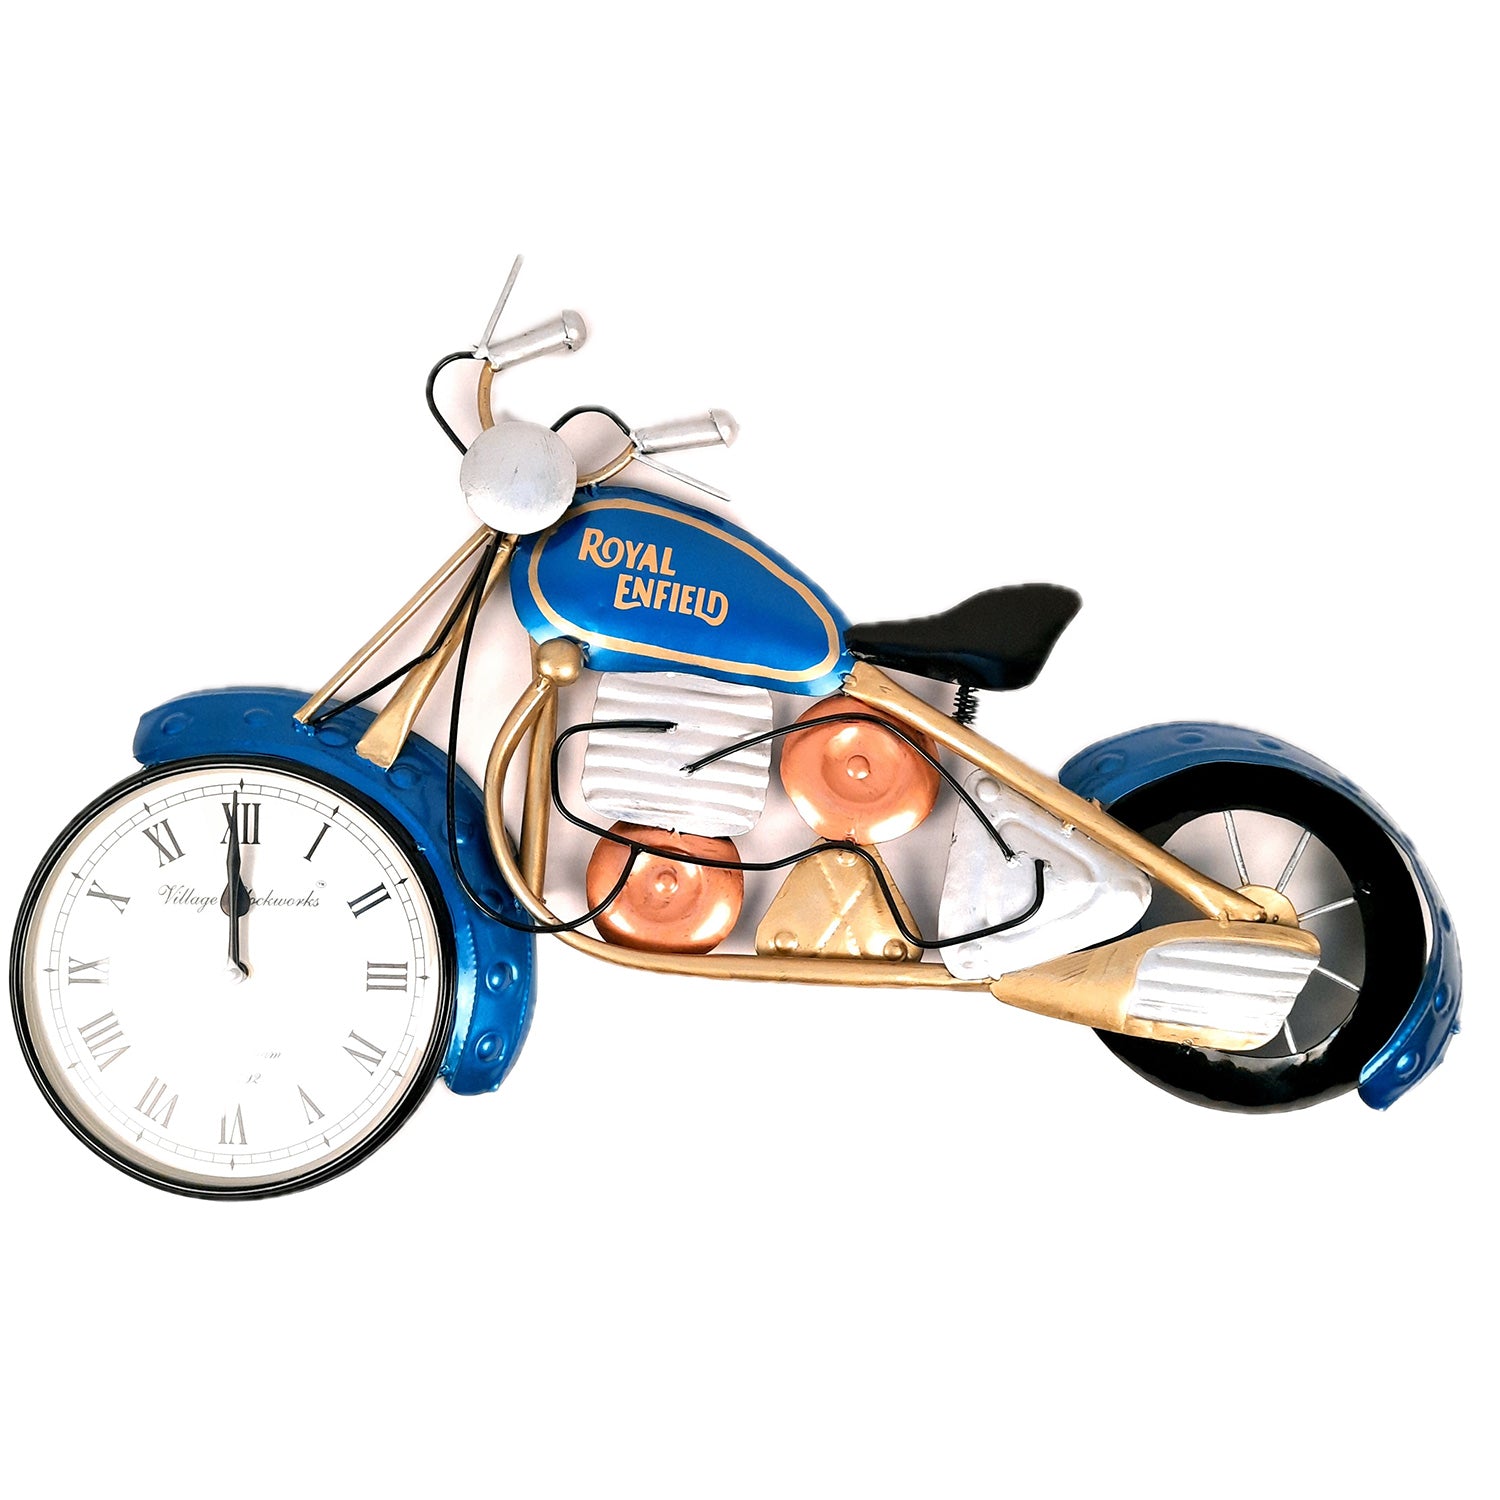 Wall Clock - Bike Design | Wall Mount Royal Enfield Bike Clock With Vintage Look | Deewar Ghadi - For Home, Living Room, Bedroom, Hall, Office Decor & Gift - apkamart